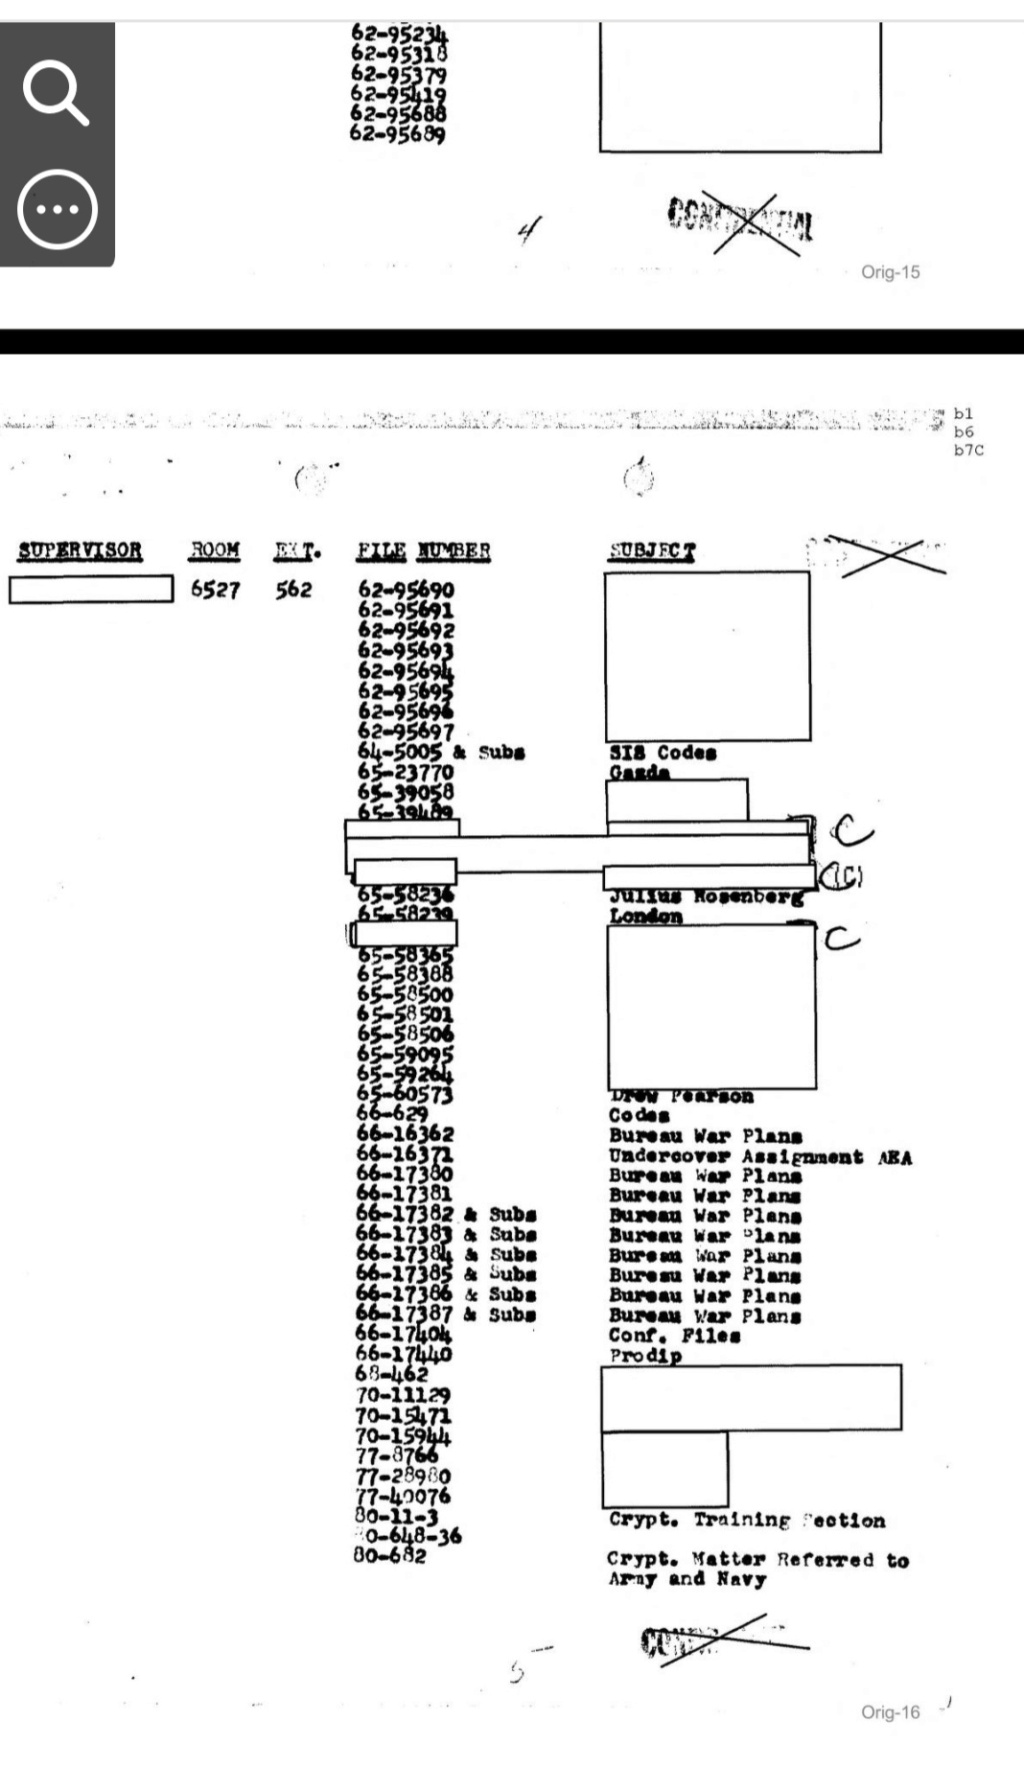 oswald  https - reopenkennedycase forumotion net - Lee Harvey Oswald FBI 65 Espionage File by Malcolm Blunt Scree566